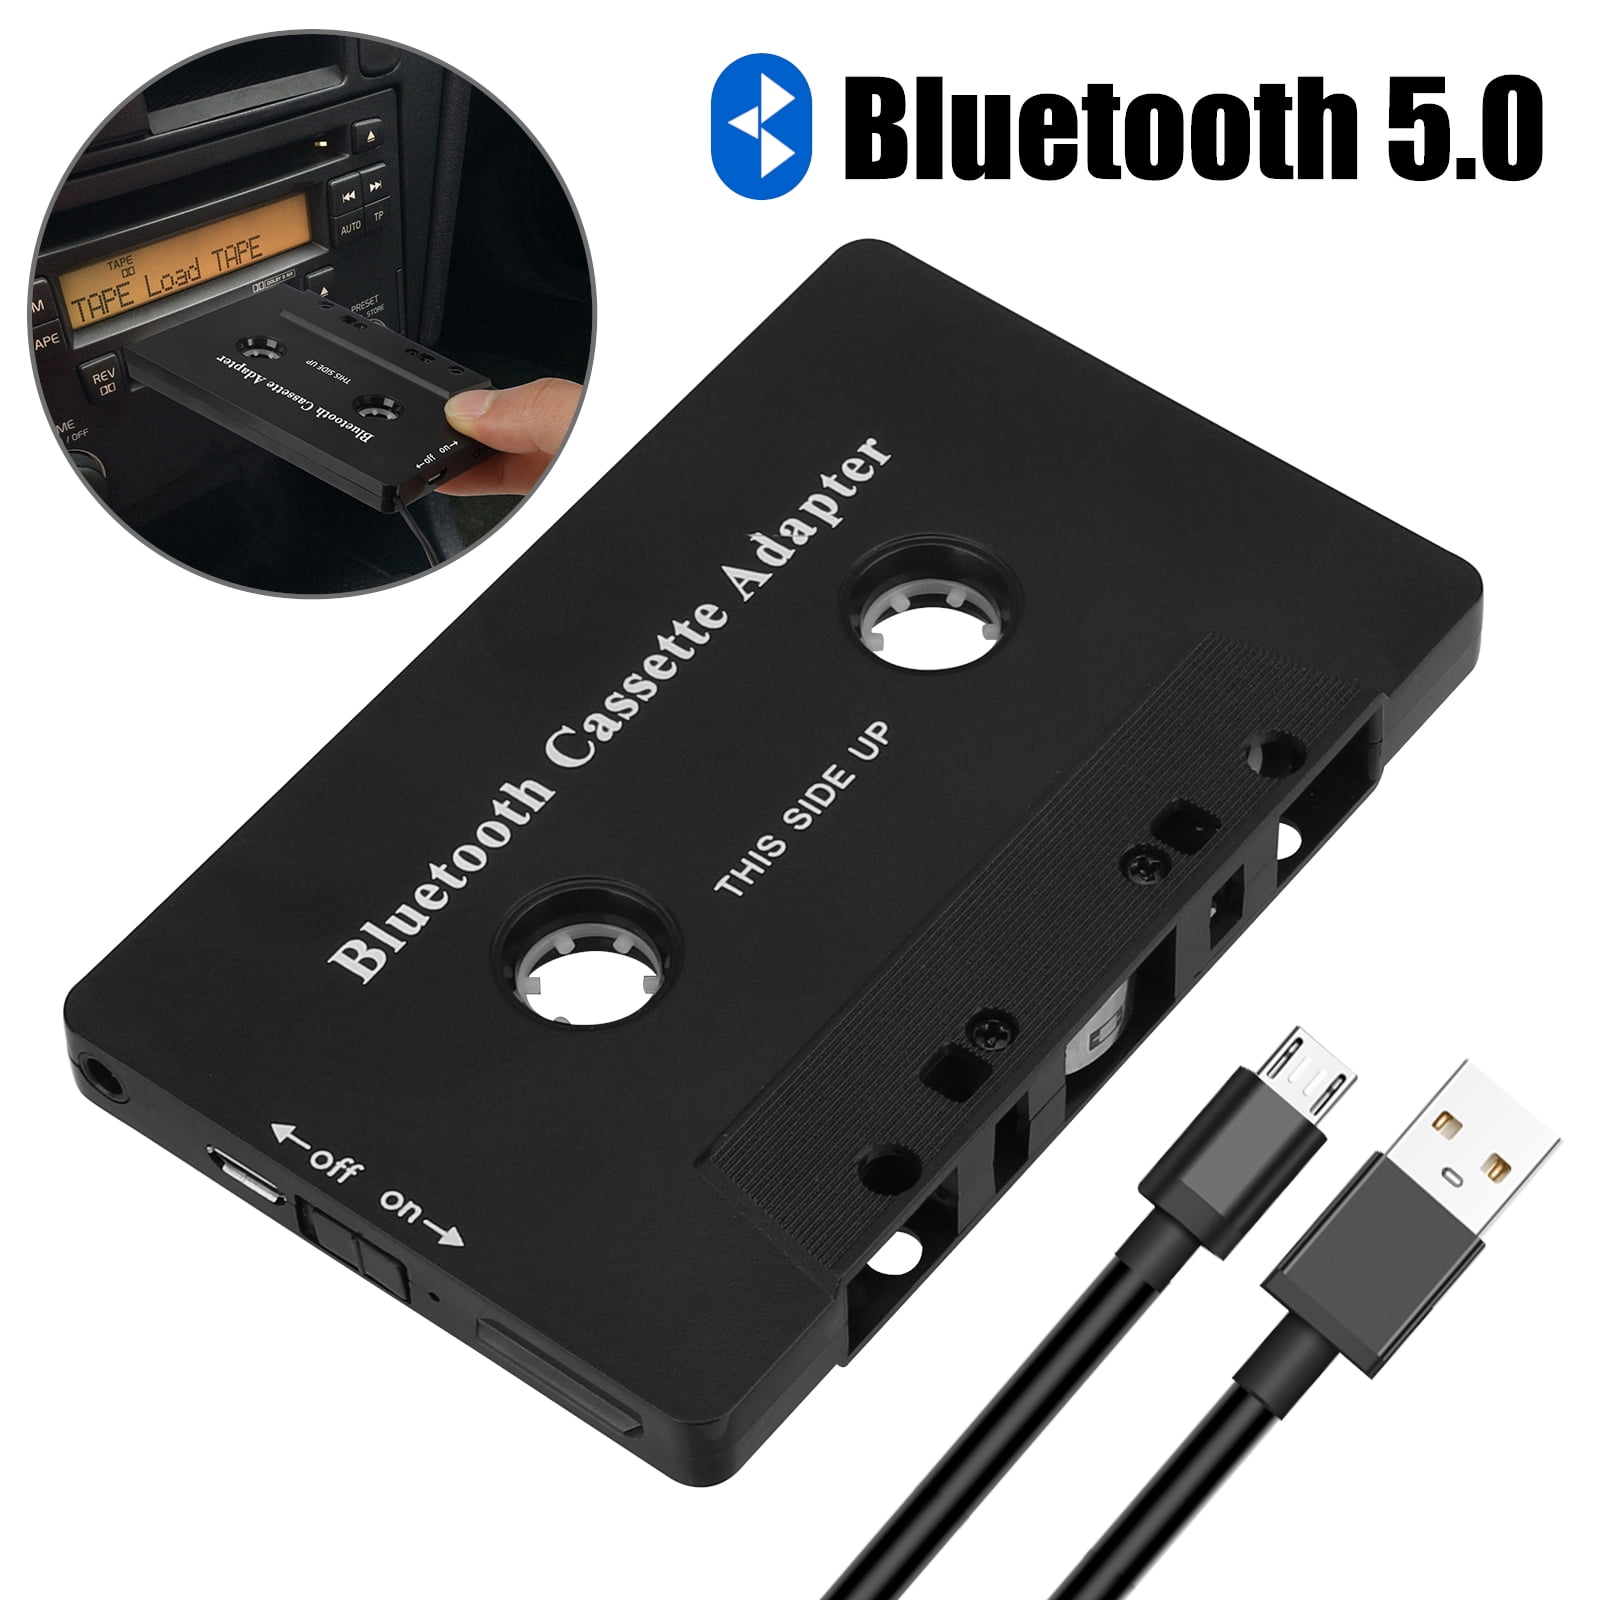 Kassettenadapter Auto Bluetooth Unterstützung Bluetooth V5.0